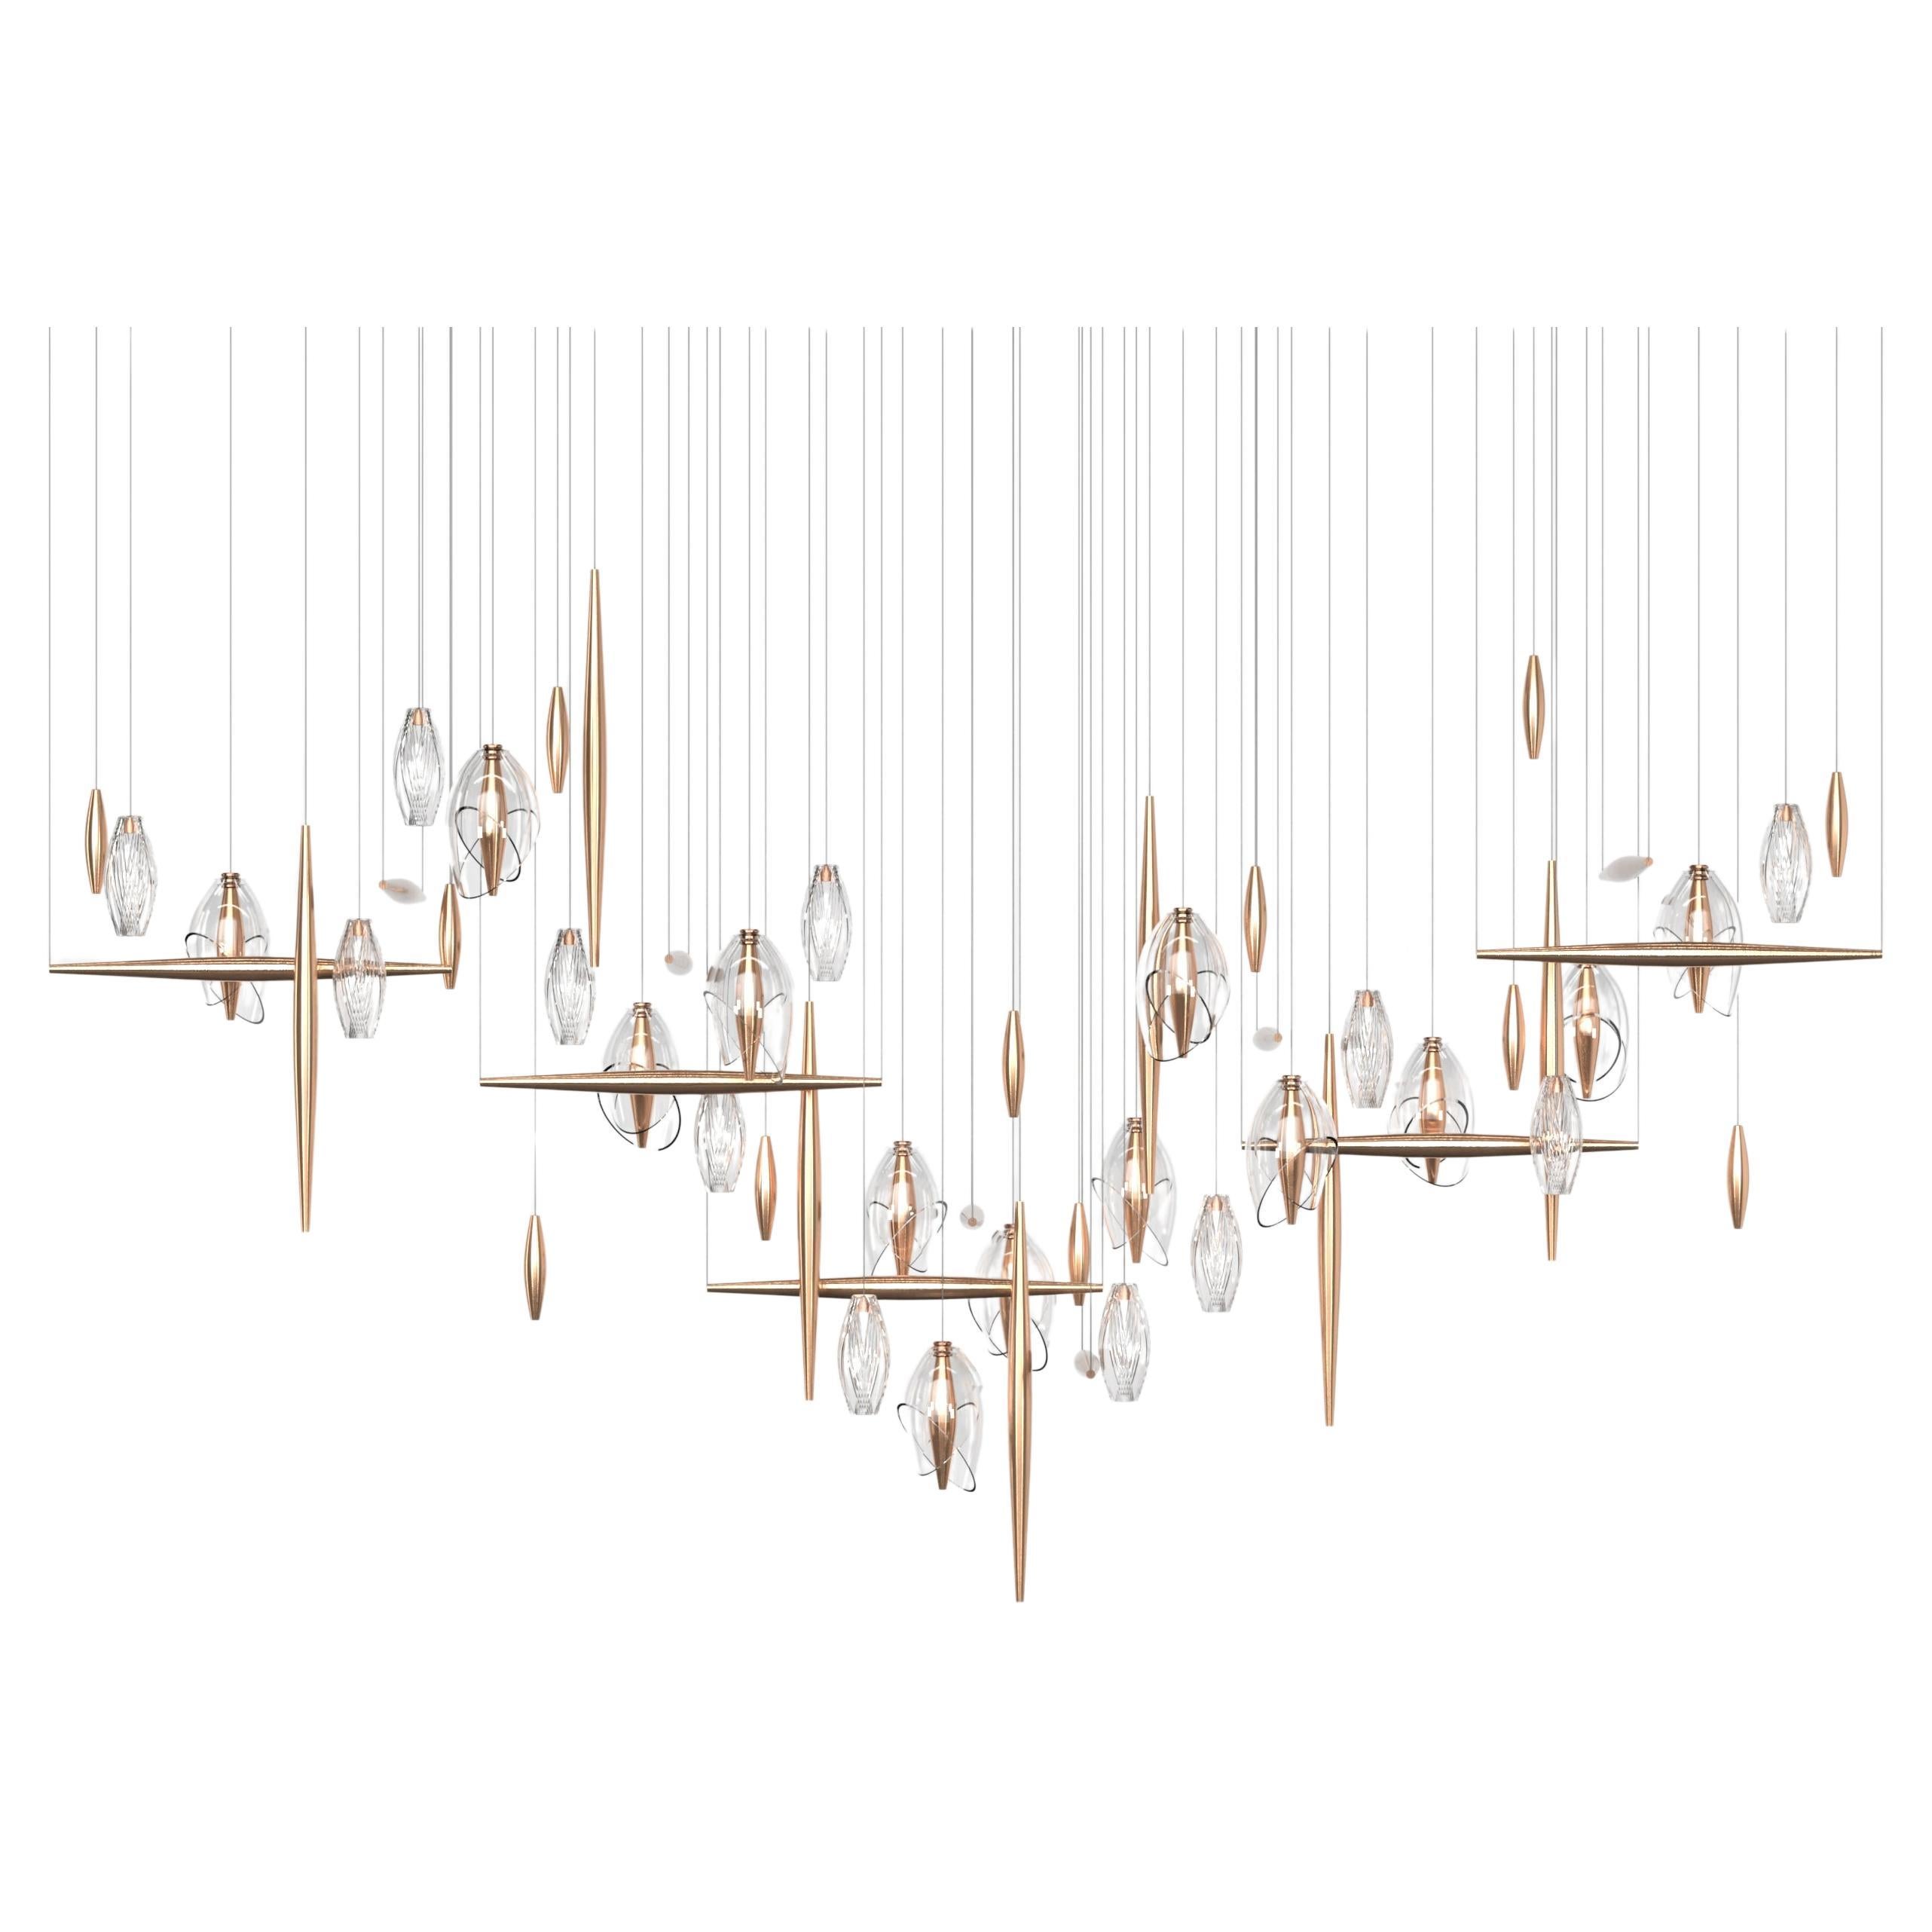 L 2500 Prisms with Ballerinas Pendant Lamp C by Tanuj Arora